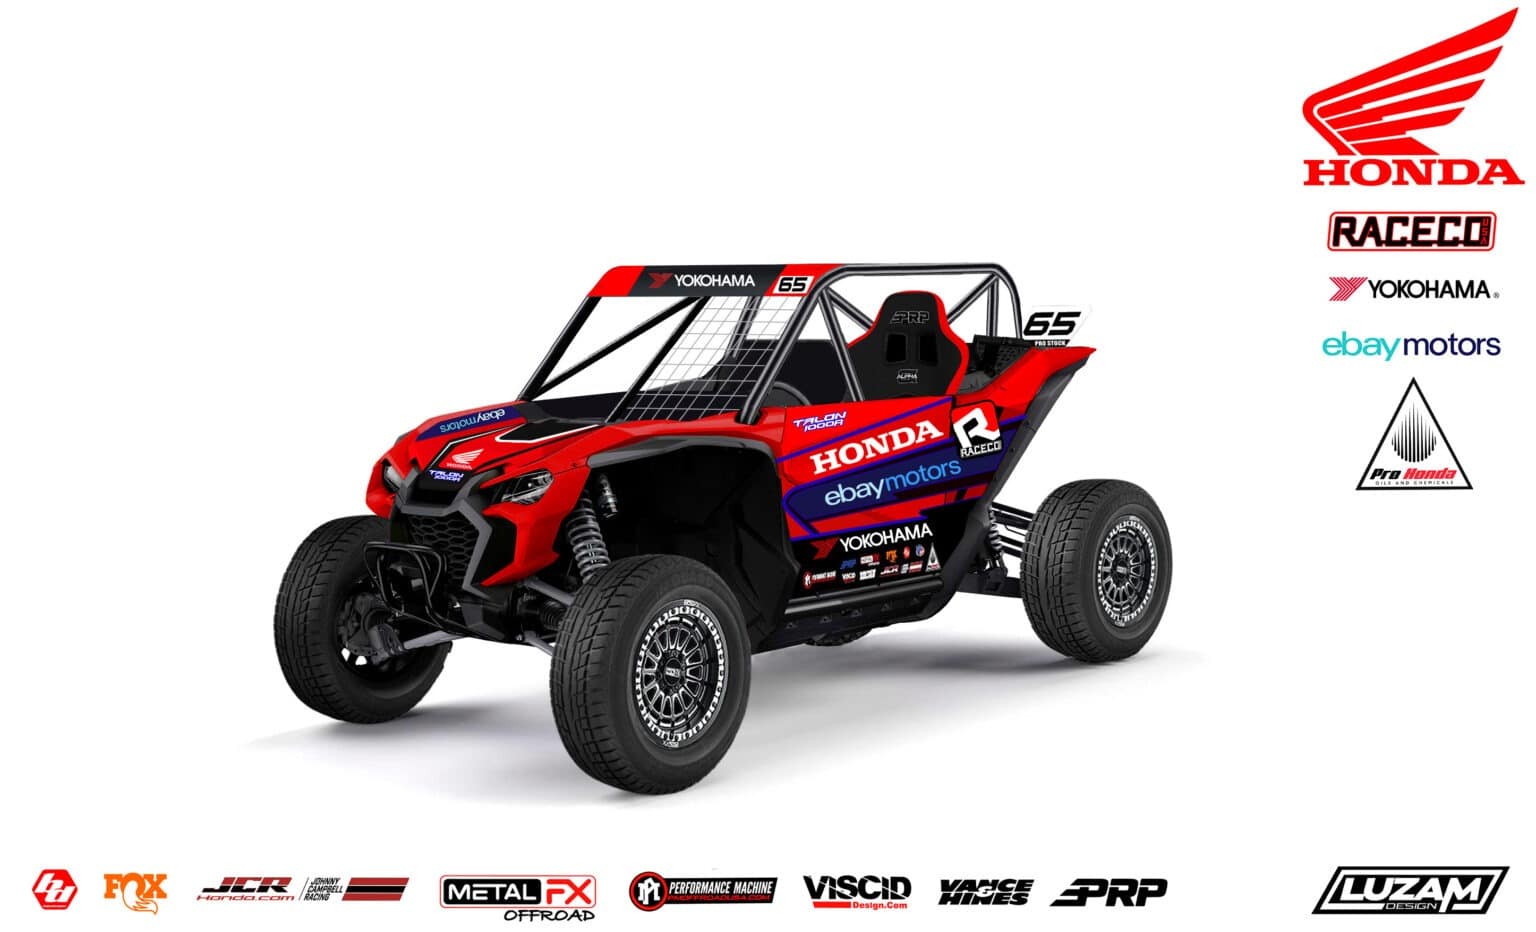 A list of sponsors underneath Team Raceco Honda's sports vehicle.